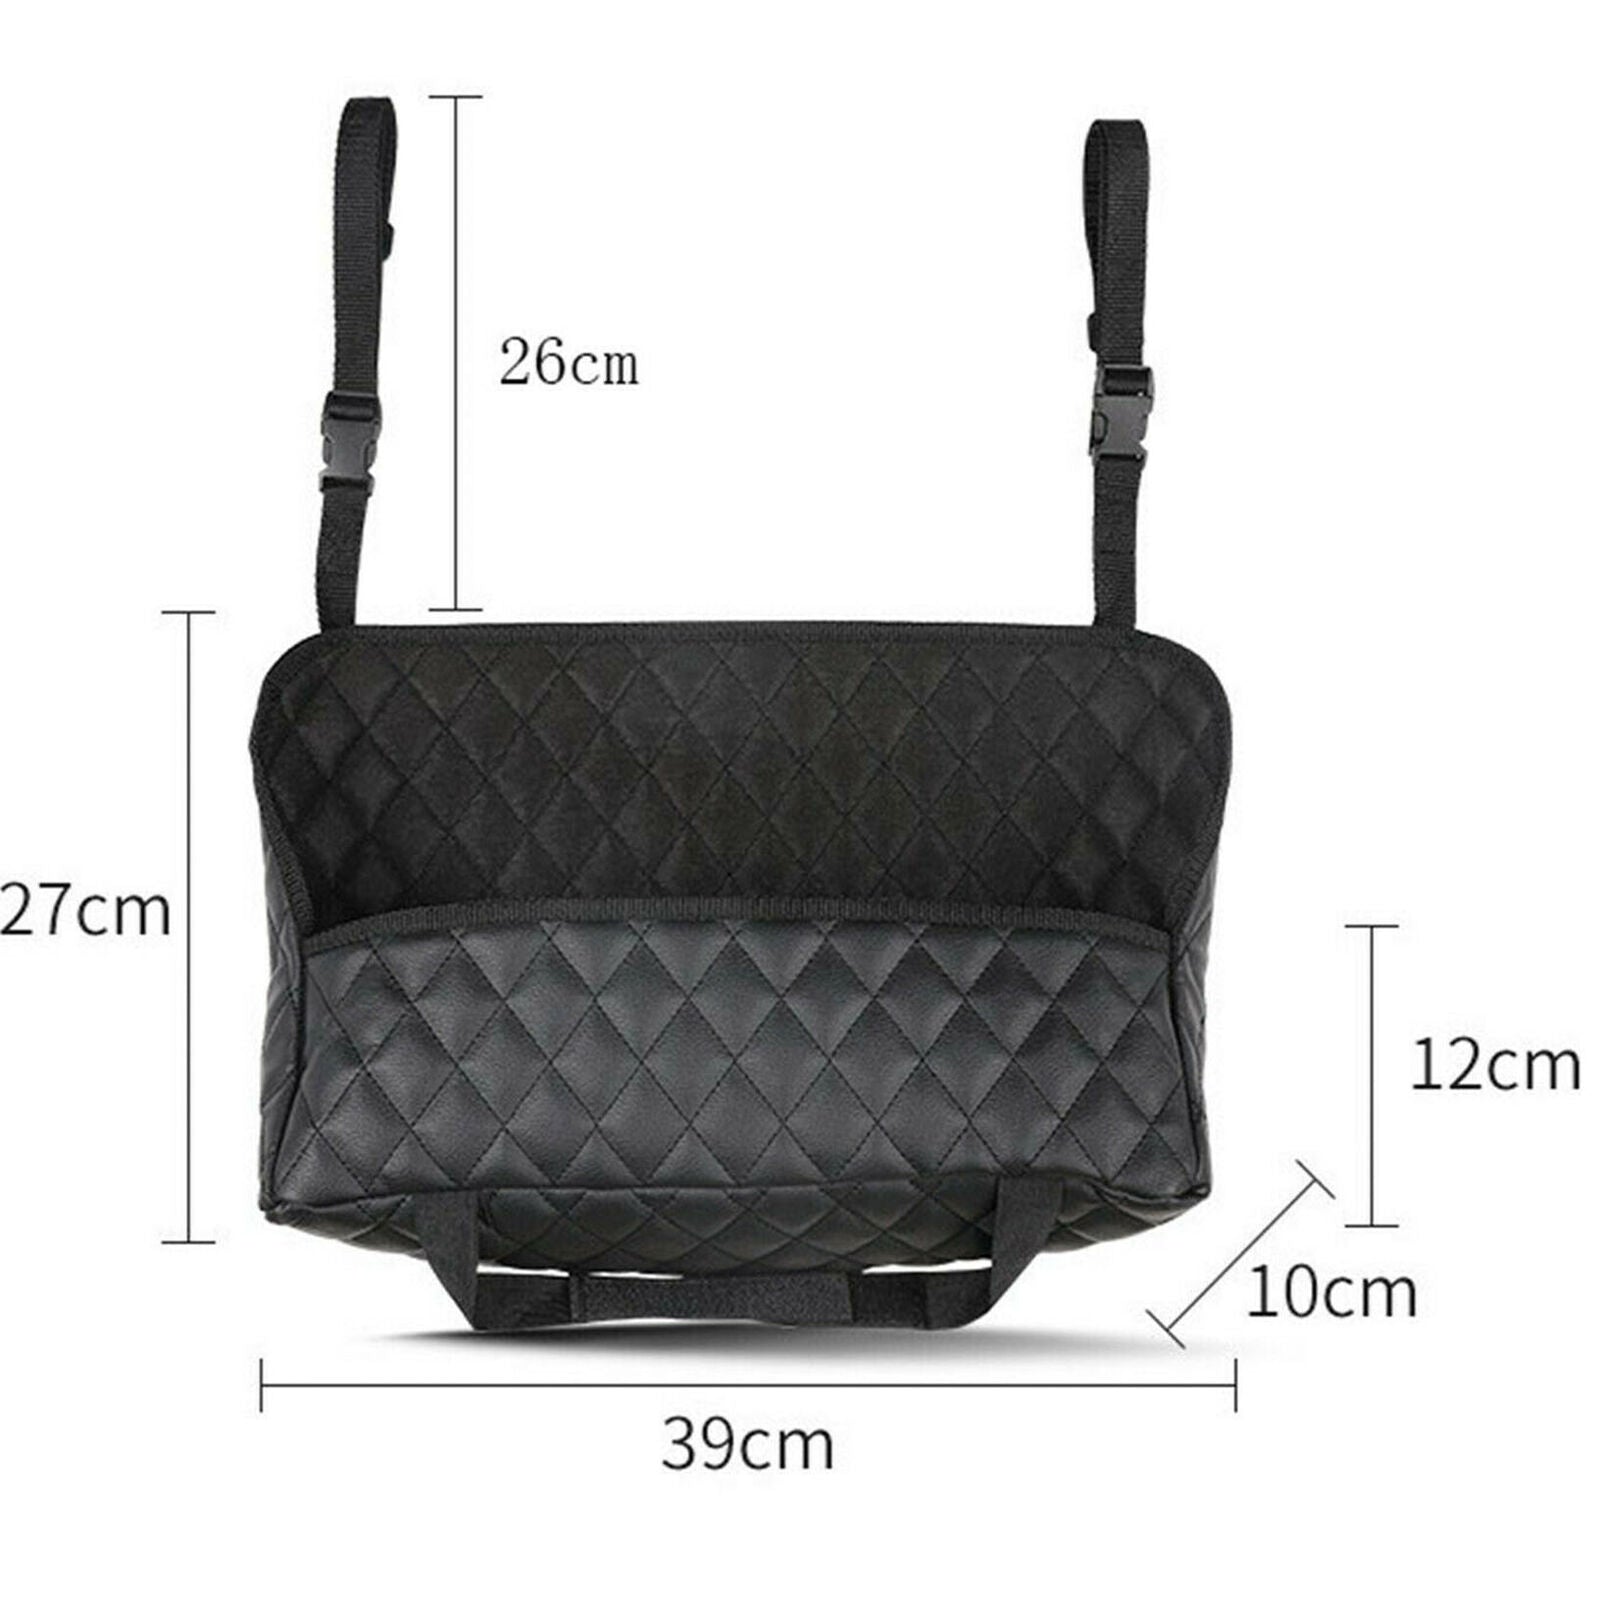 Advanced Car Net Pocket Handbag Holder PU Leather Between Car Seat Storage Black